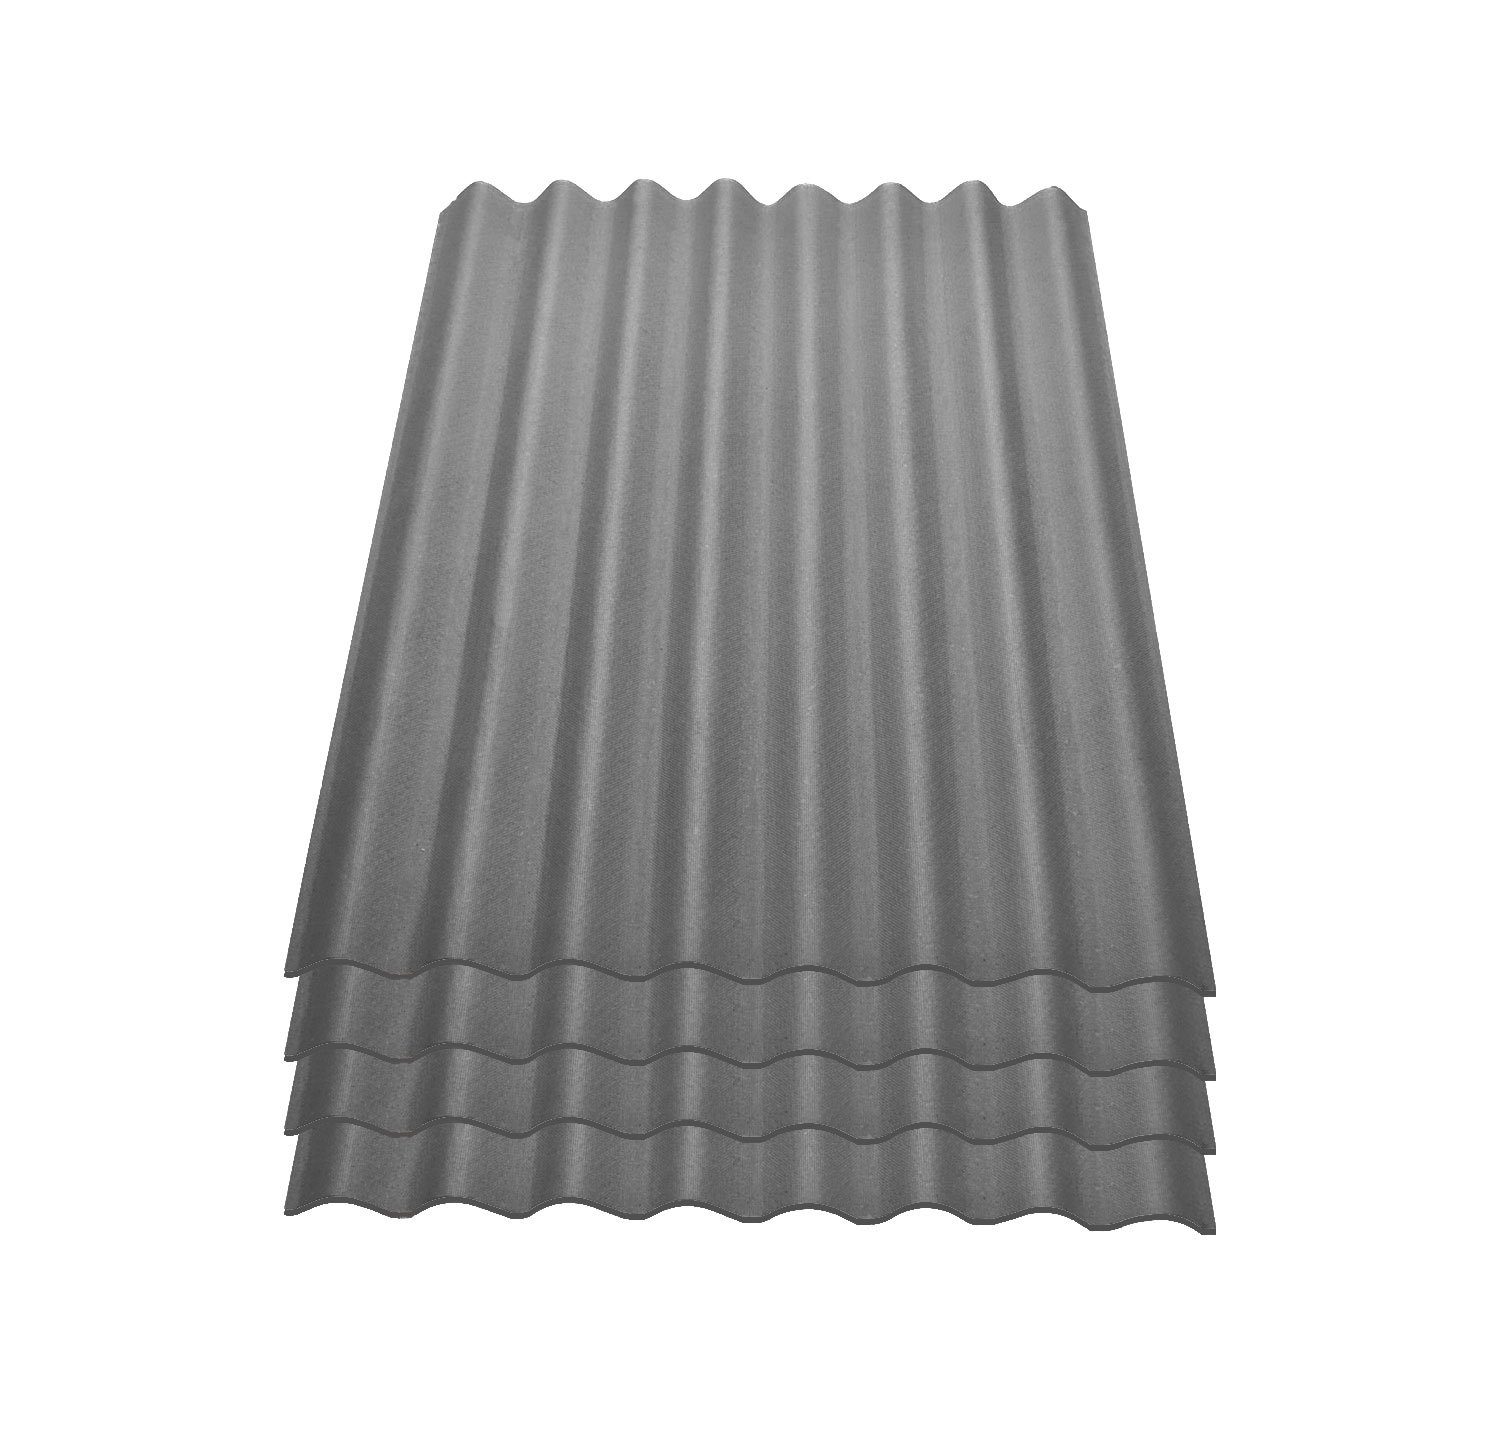 Onduline Dachpappe Onduline Easyline Dachplatte Wandplatte Bitumenwellplatten Wellplatte 4x0,76m² - grau, wellig, 3.04 m² pro Paket, (4-St)